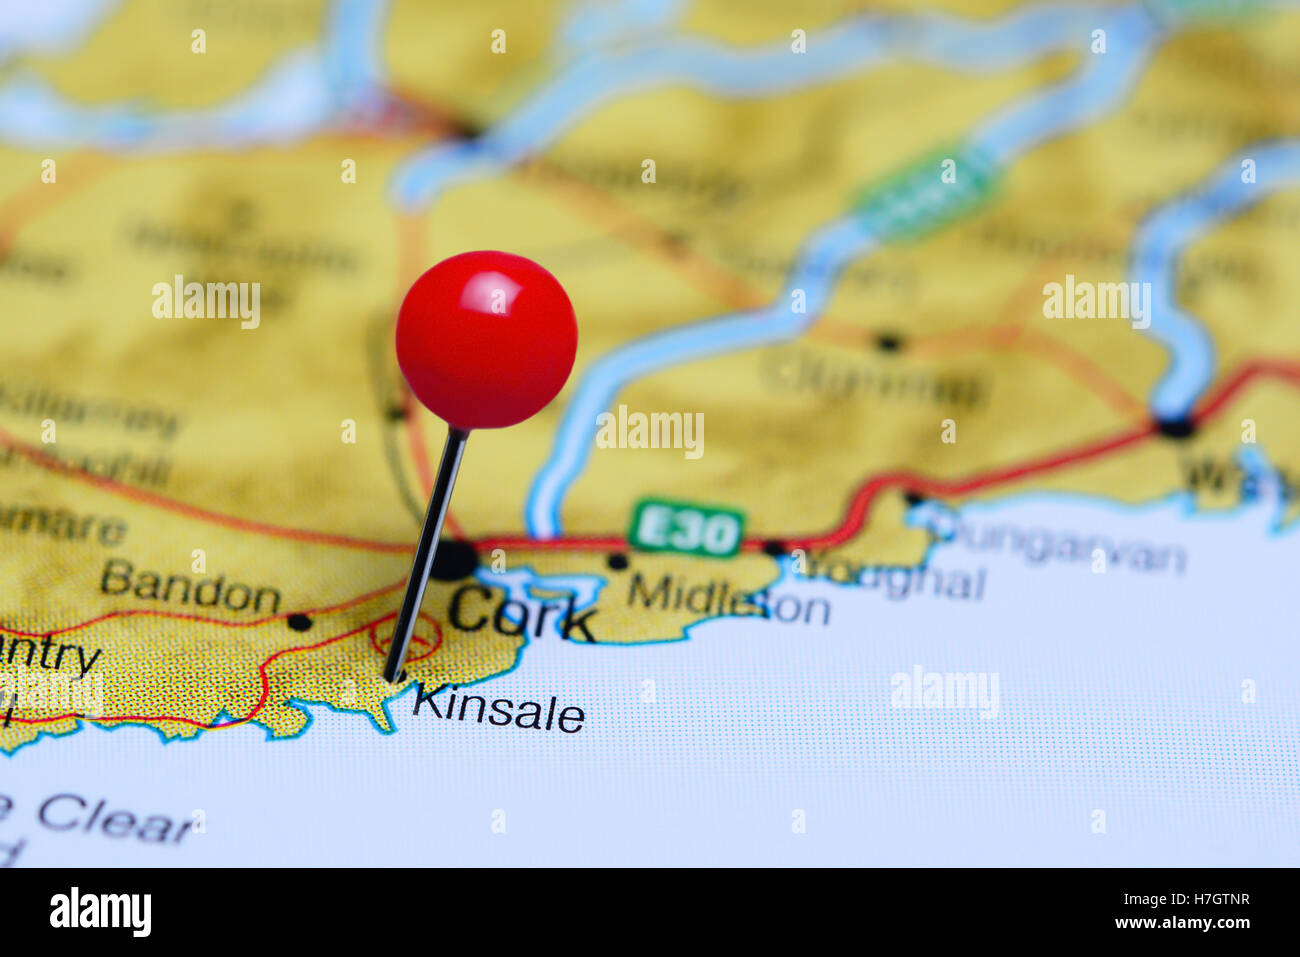 Kinsale pinned on a map of Ireland Stock Photo